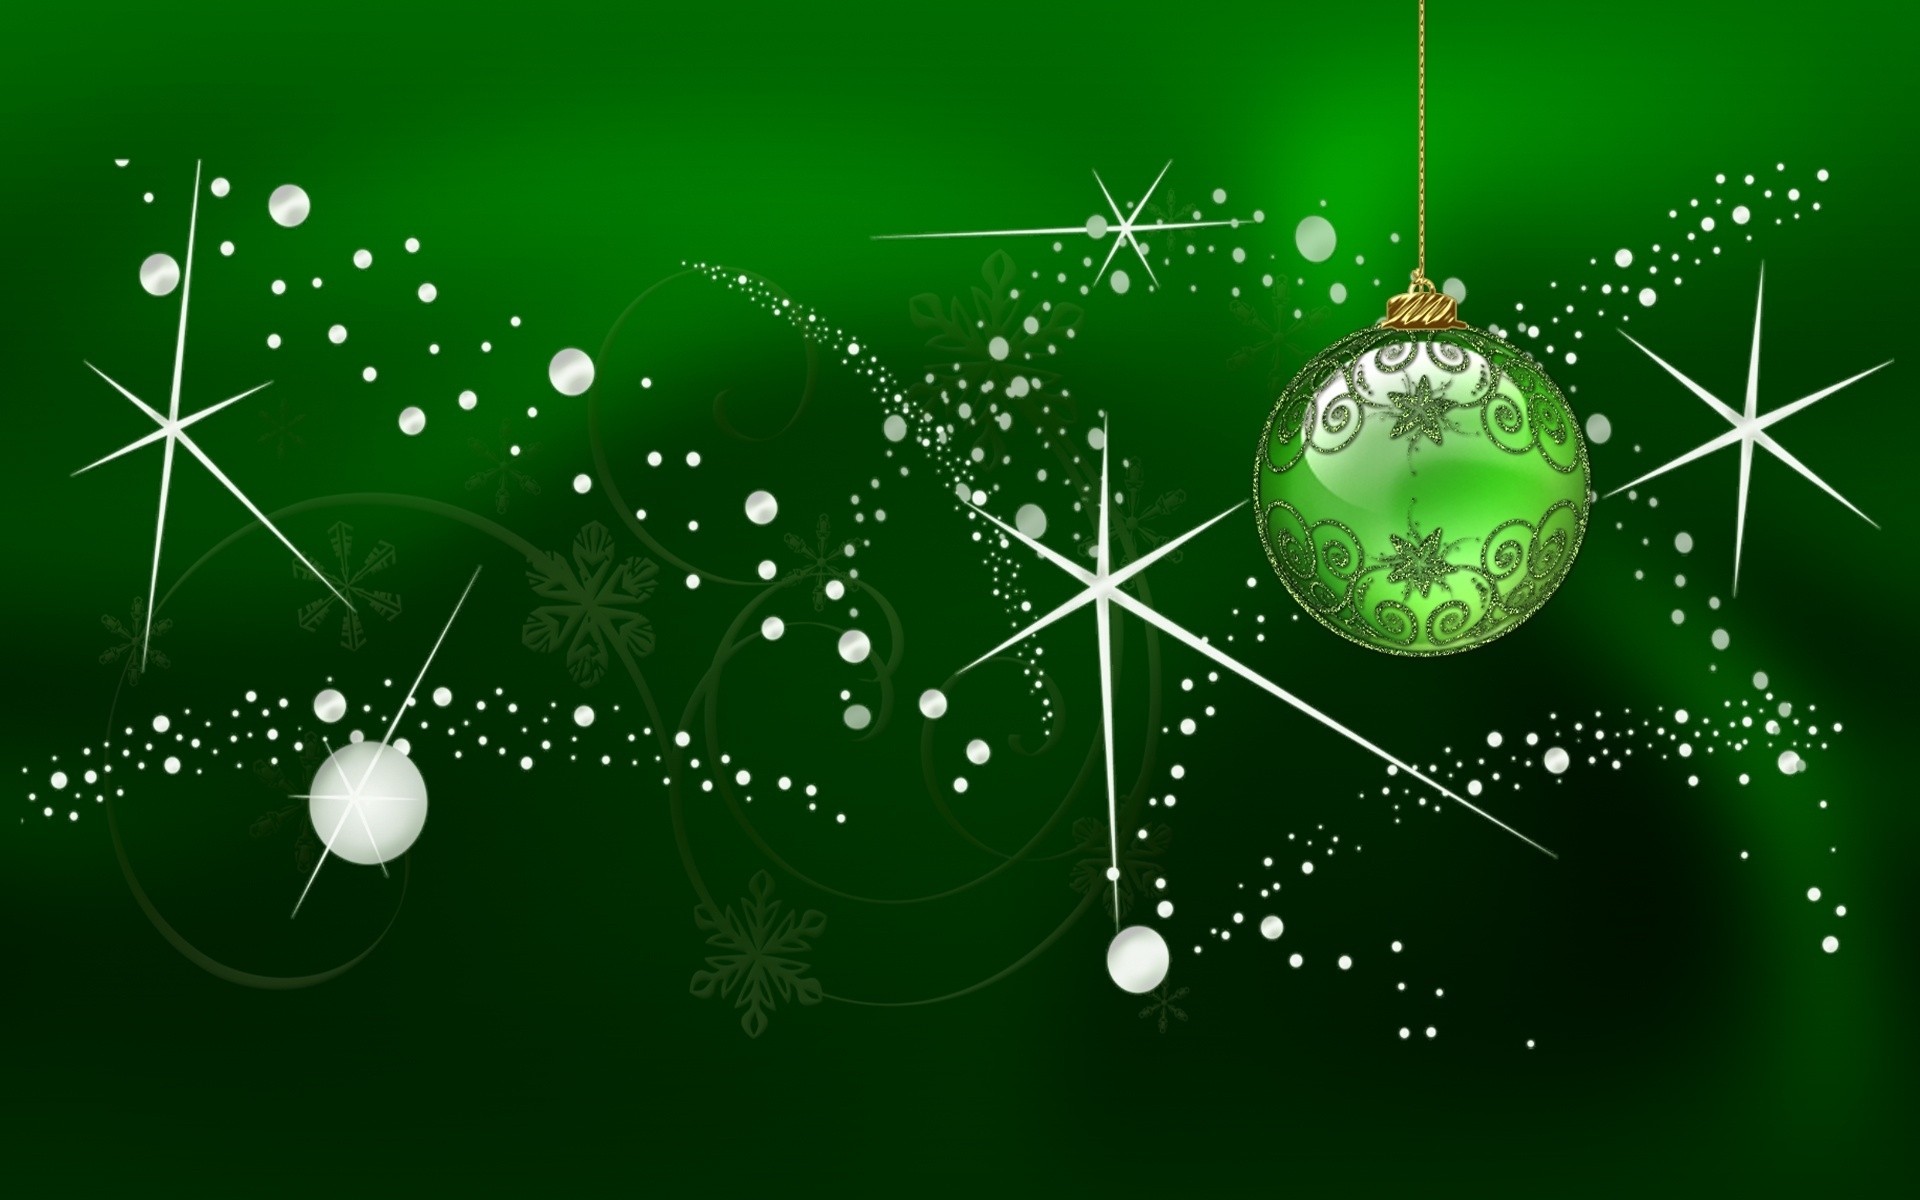 christmas winter merry shining desktop sphere abstract snowflake celebration bright decoration illustration design season eve greeting ball light card hanging background lights